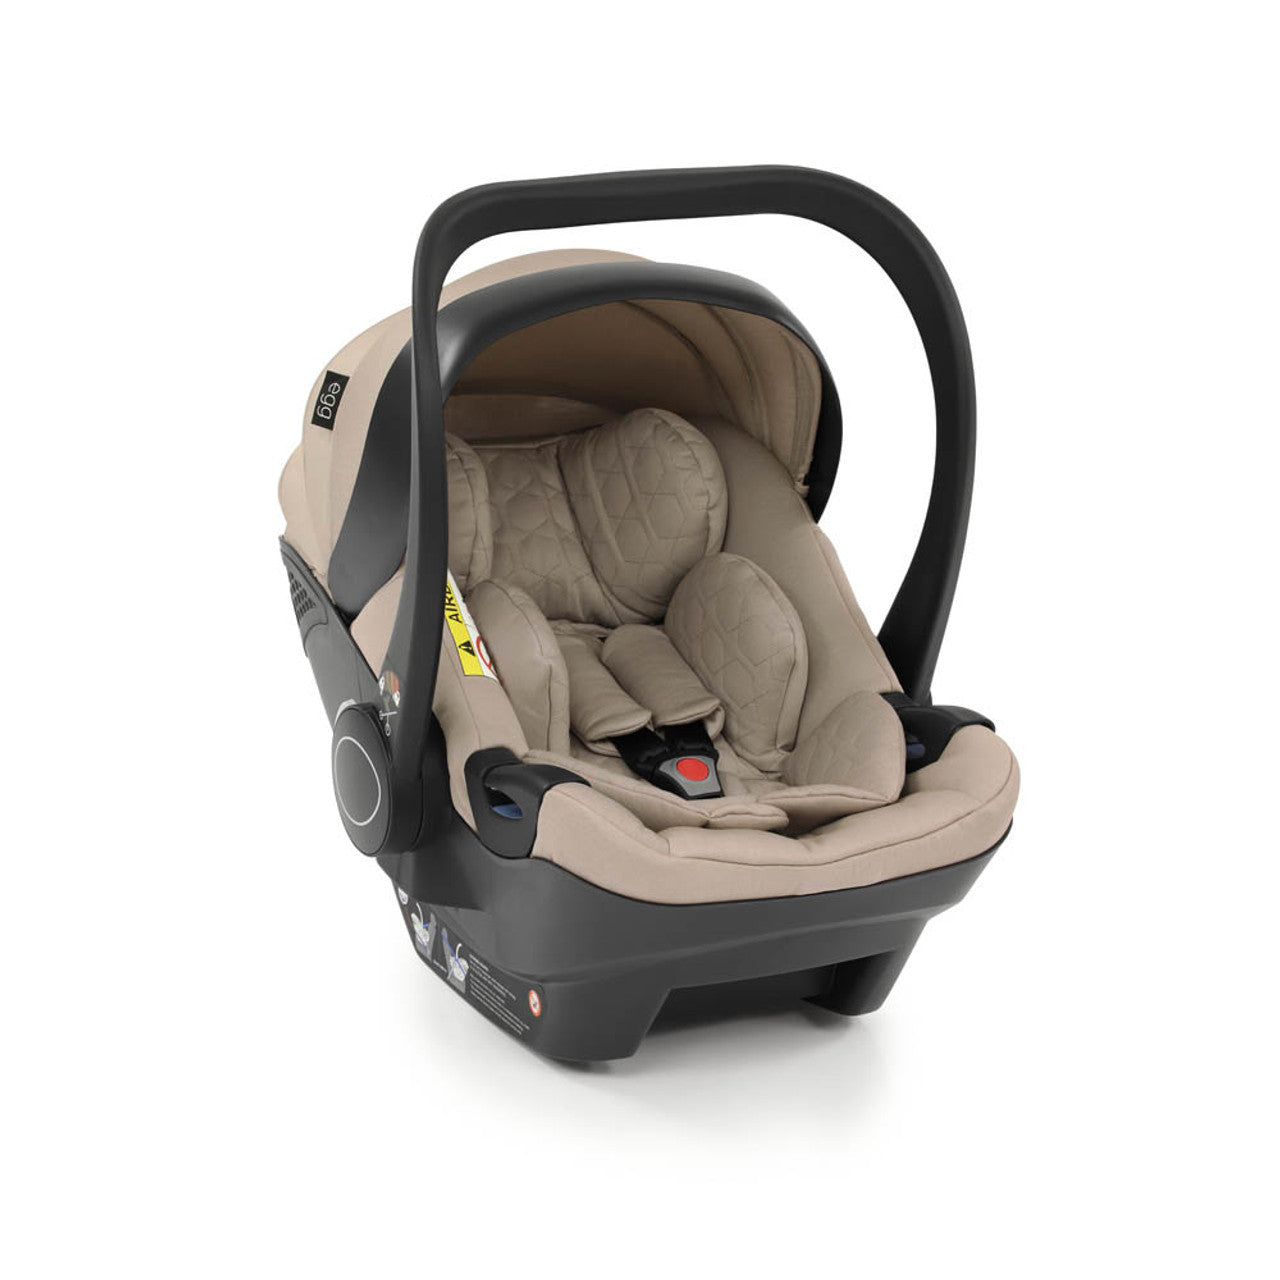 Egg Shell I-Size Newborn Car Seat - Feather